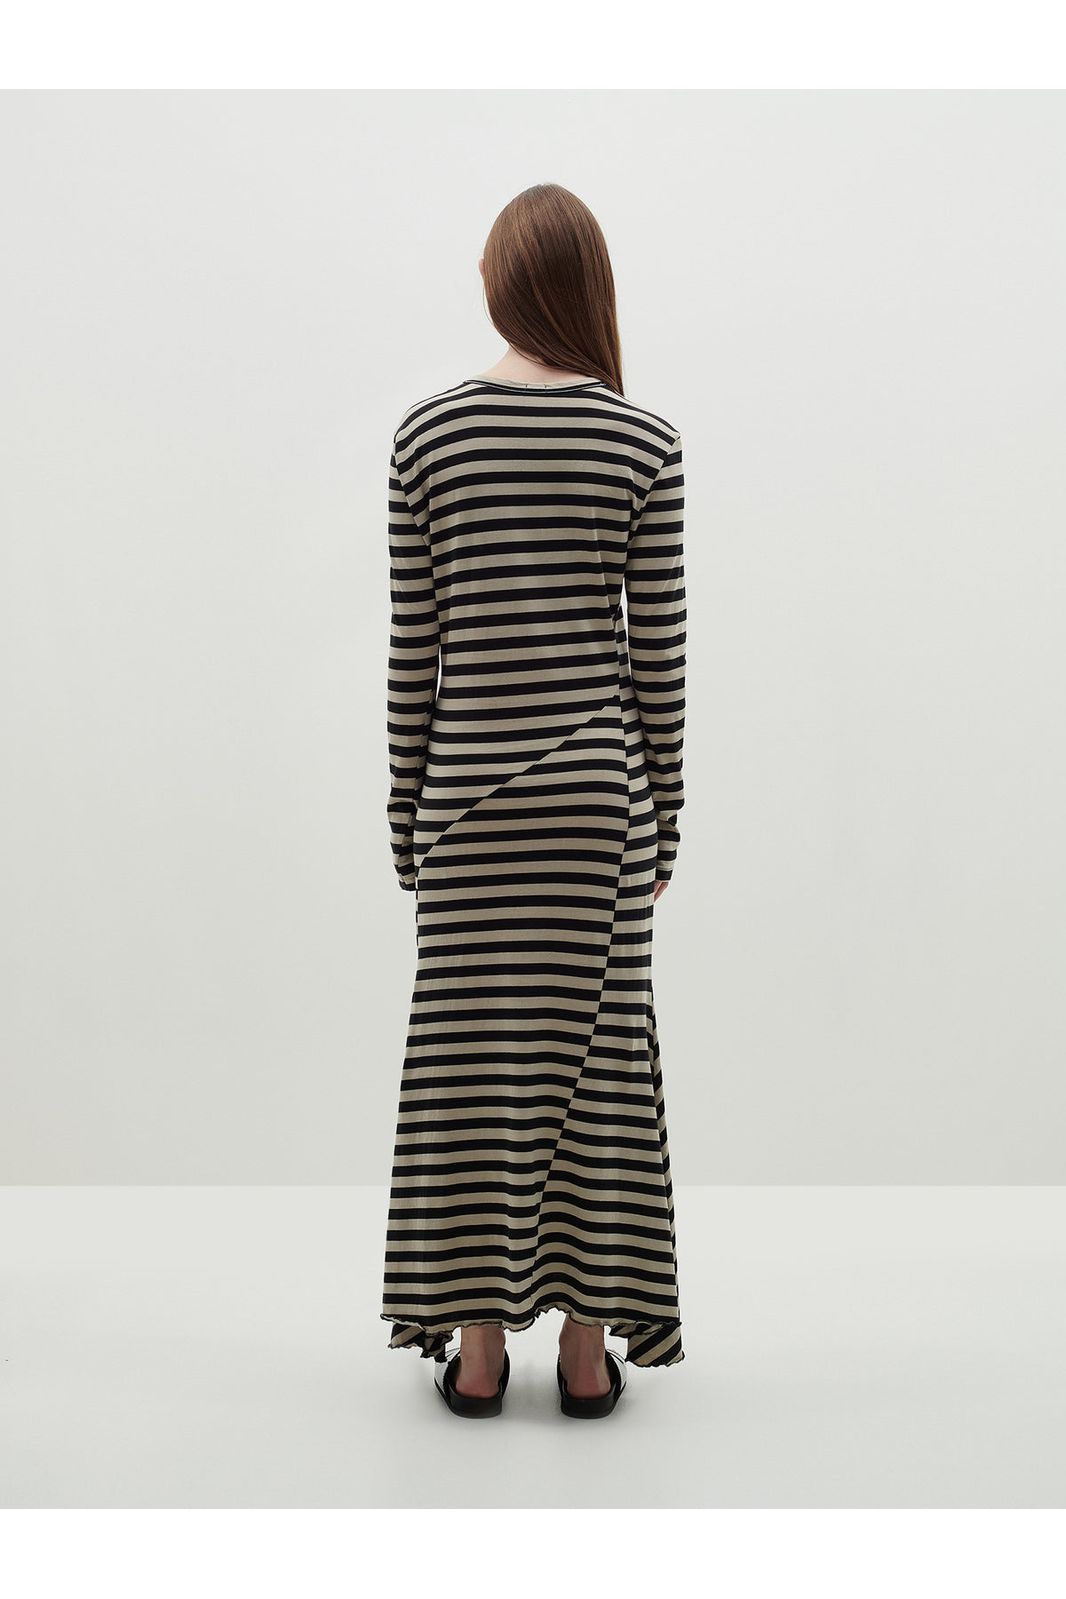 Stripe Heritage Paneled Long Sleeve Dress in Black Oatmeal by Bassike